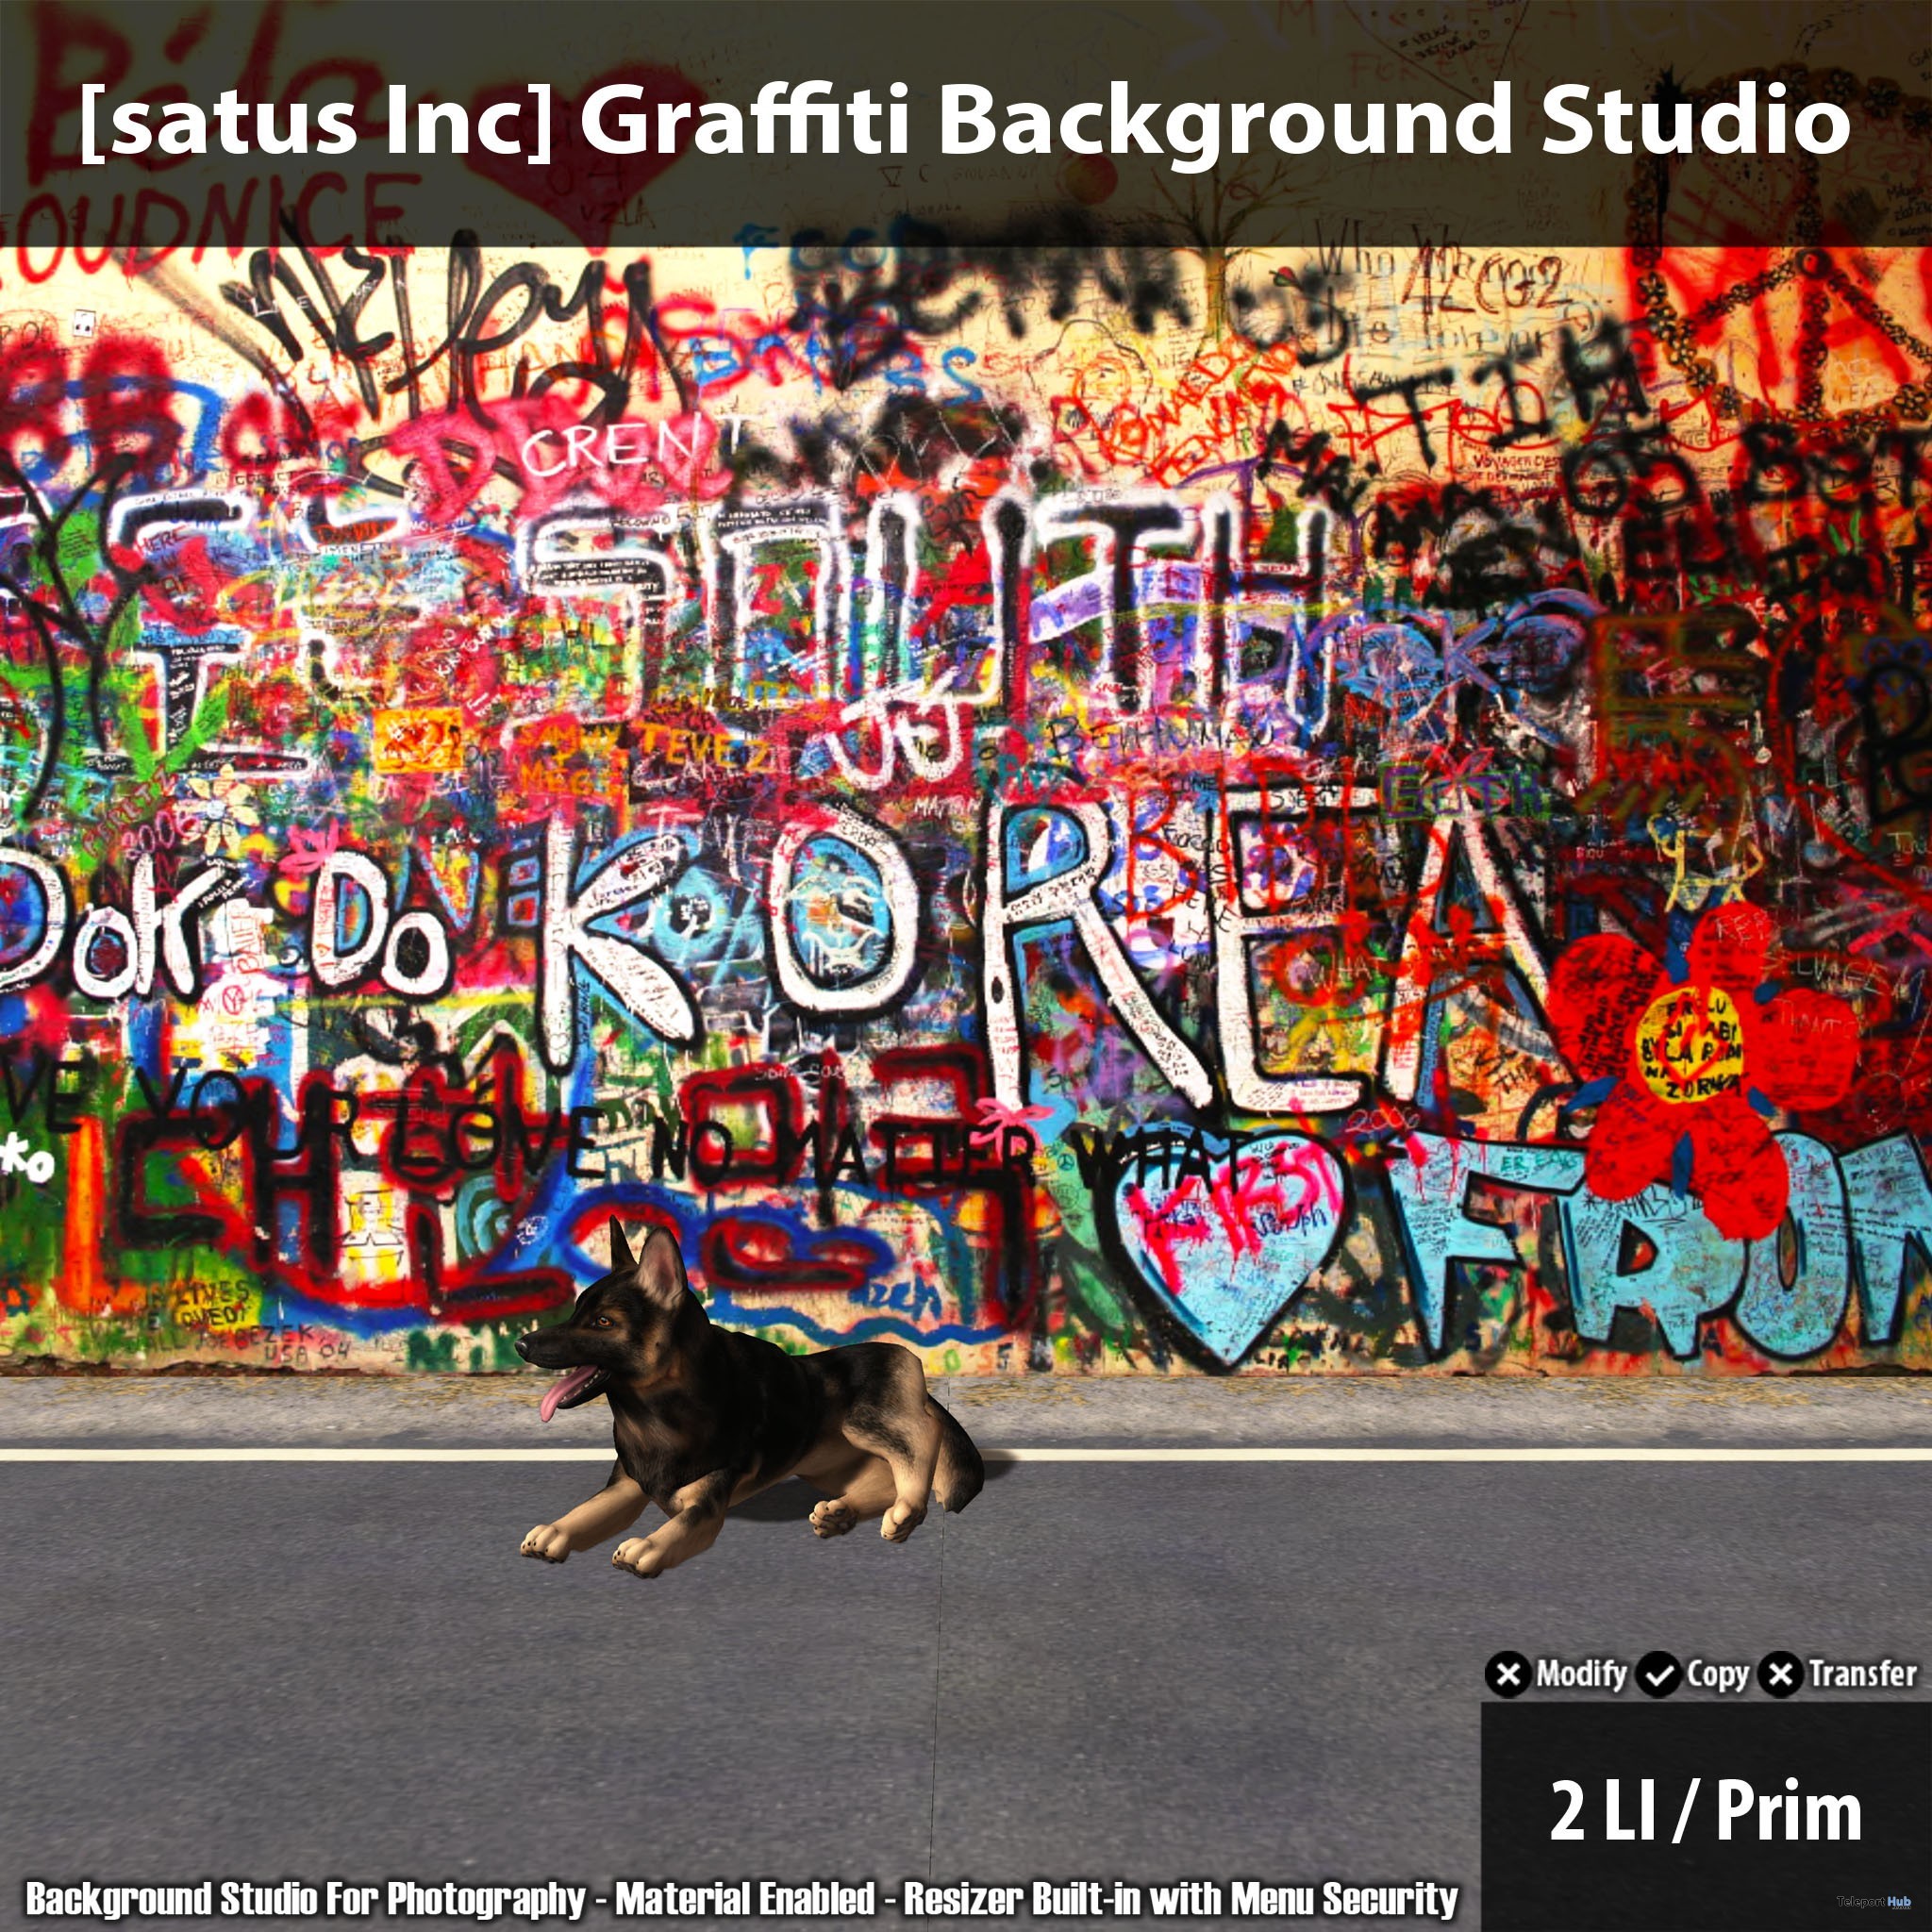 2048x2048 Graffiti Background Studio Group Gift by [satus Inc] - Teleport Hub -  teleporthub.